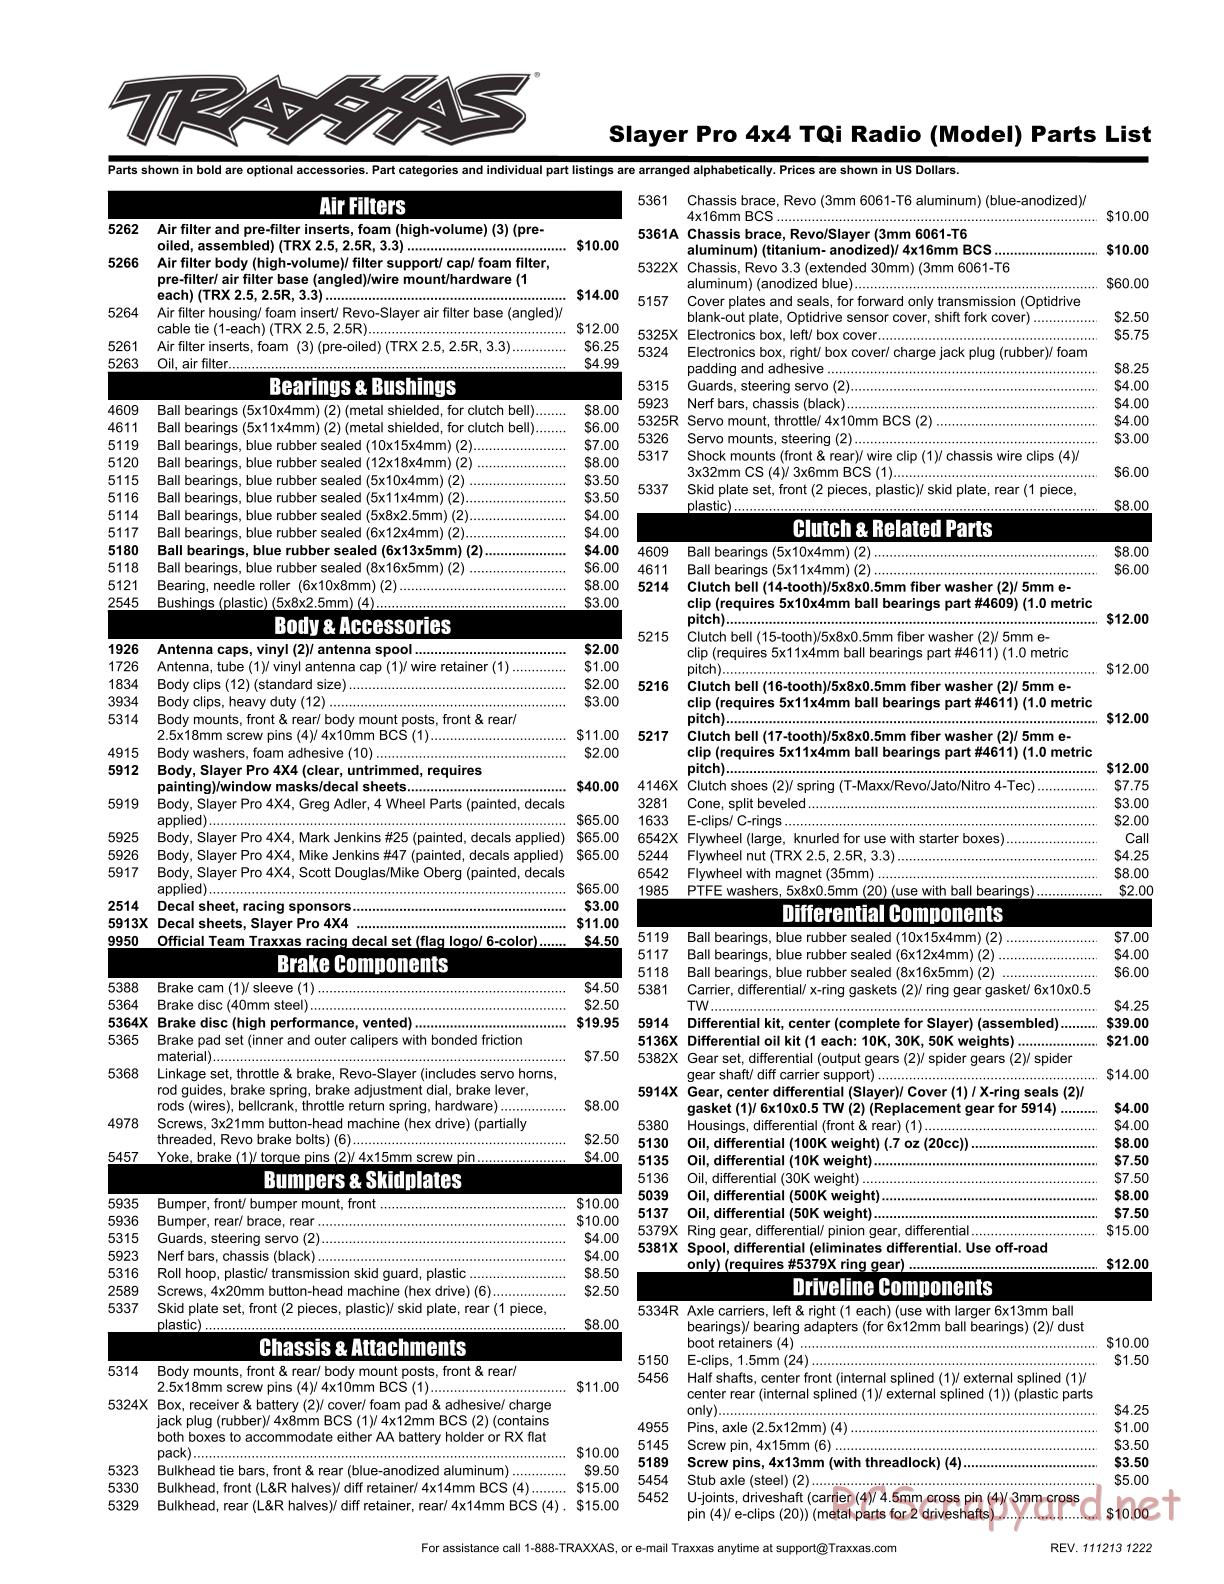 Traxxas - Slayer Pro 4x4 - Parts List - Page 1